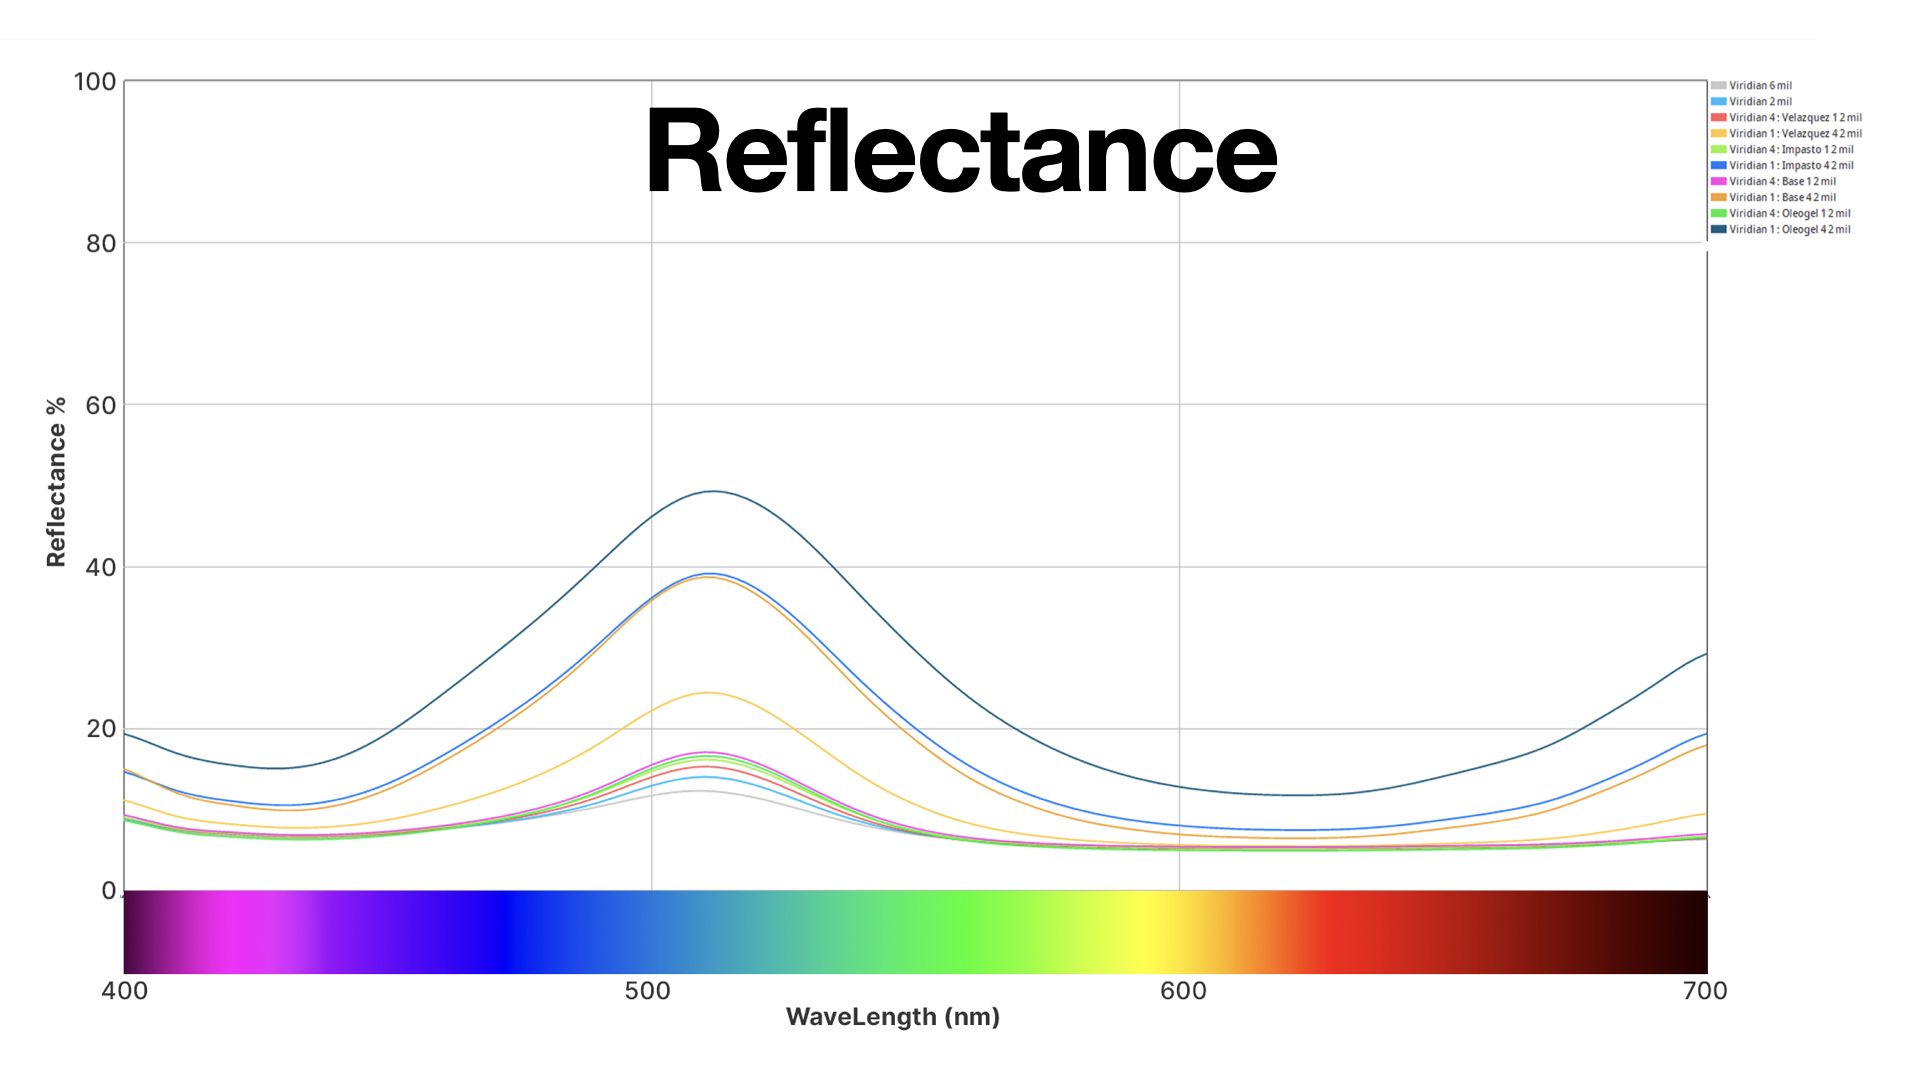 Reflectance of wavelengths of visible light